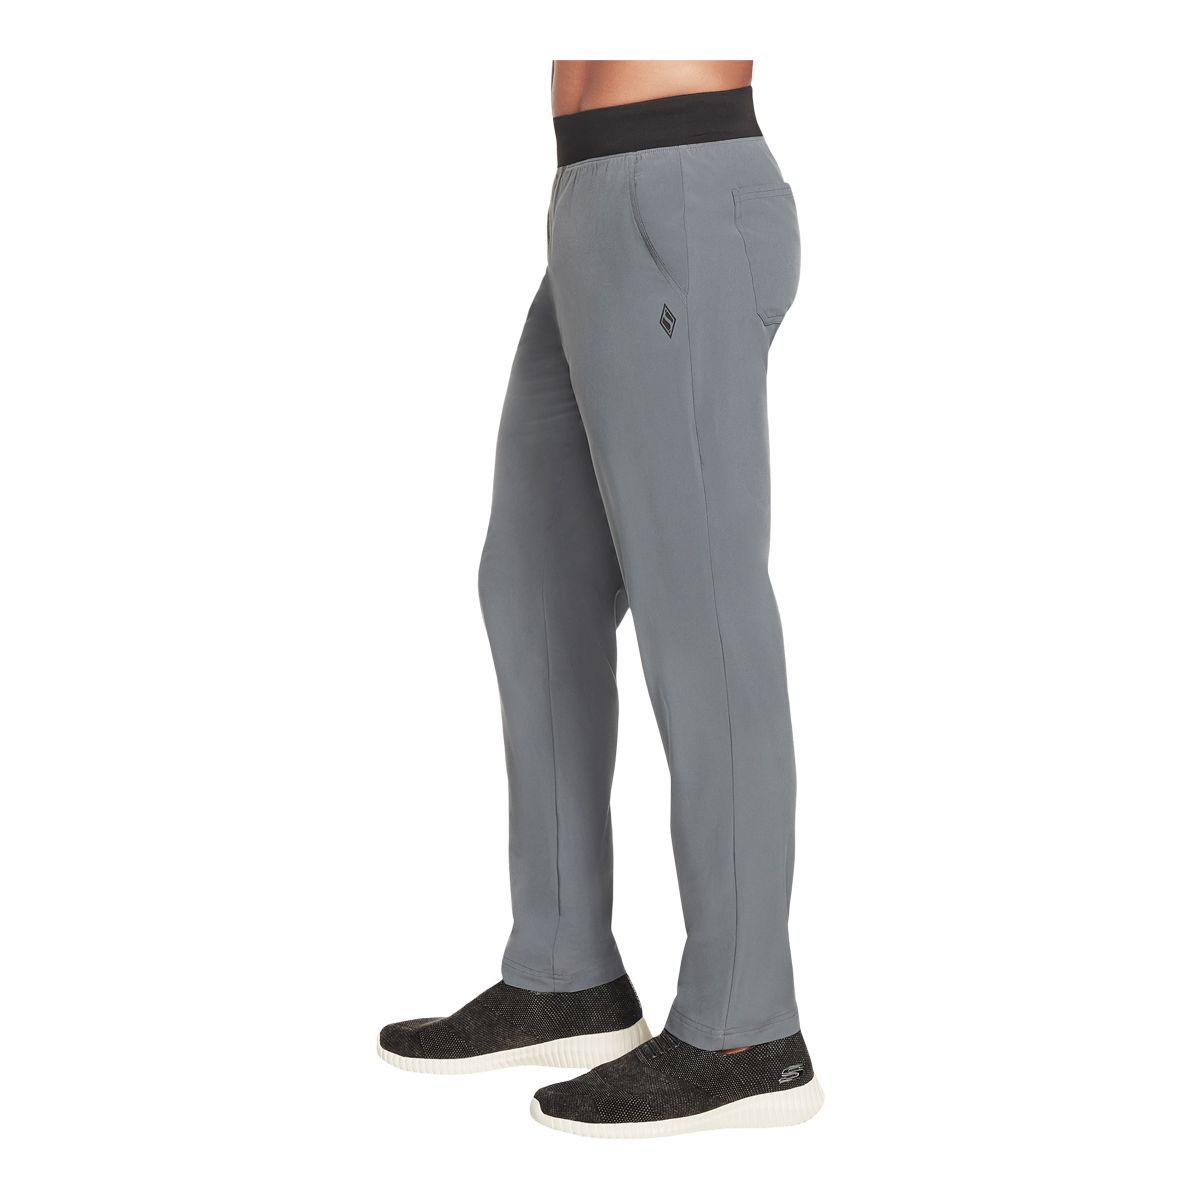 Skechers Gray Active Pants Size XL - 56% off